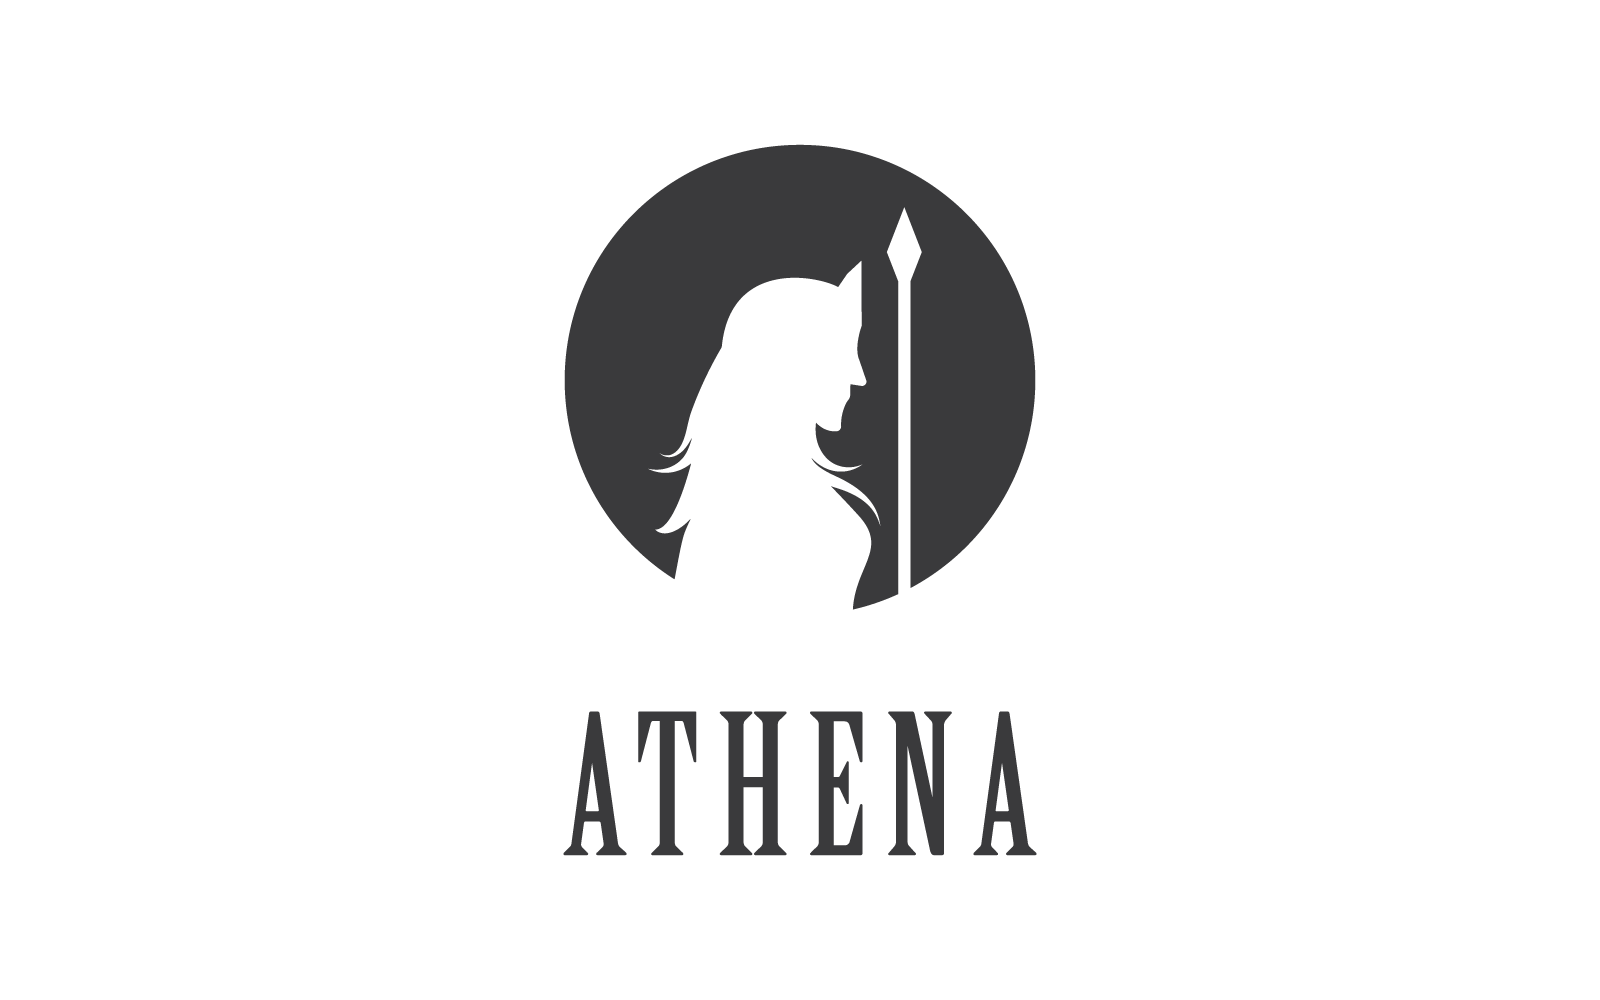 Silhouette of athena logo vector flat design